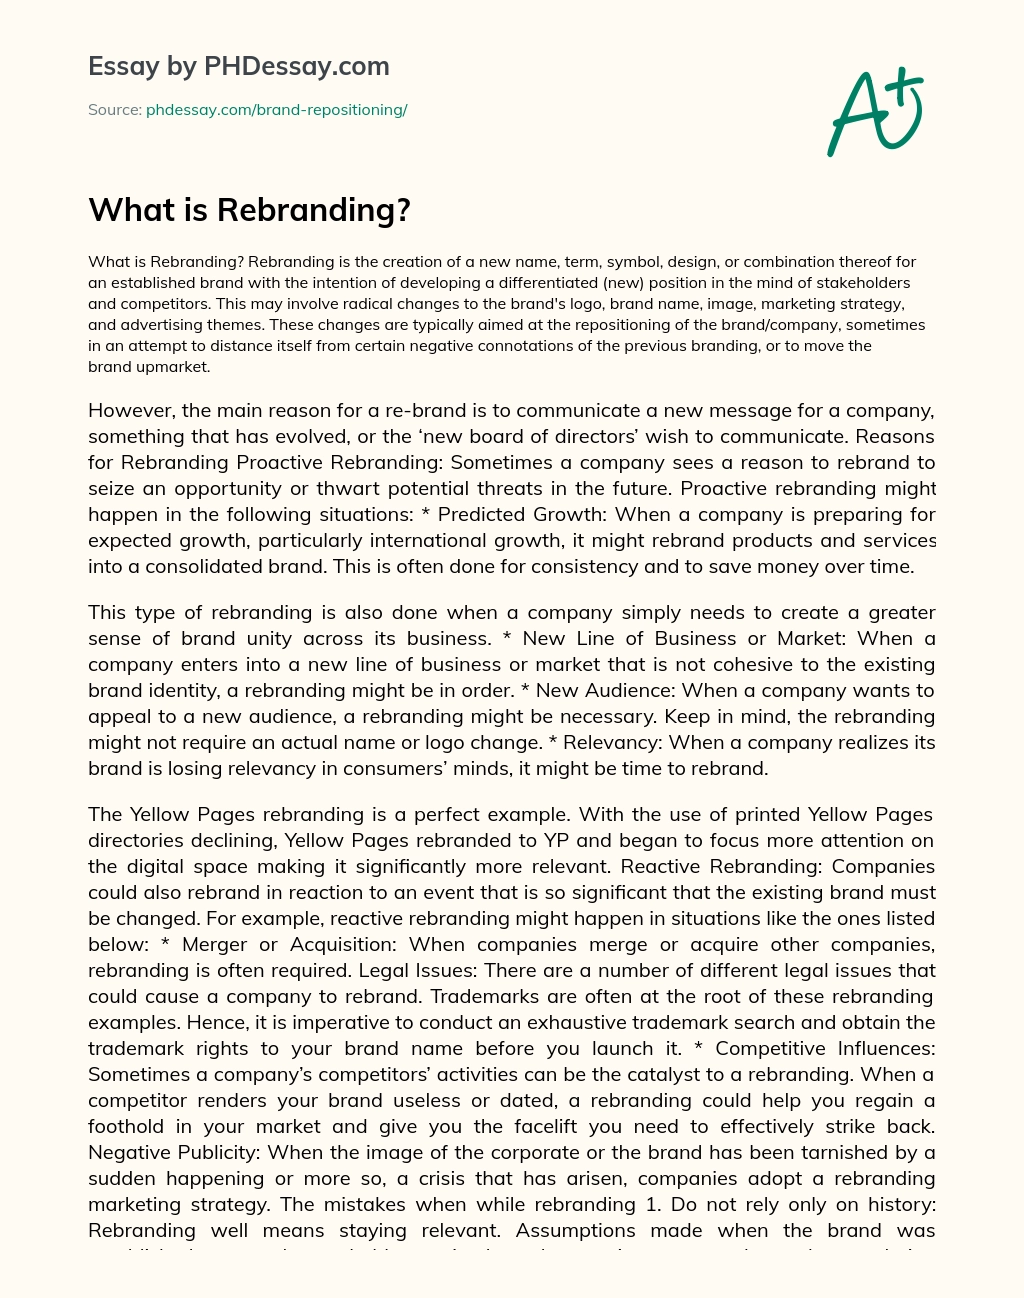 What is Rebranding? essay